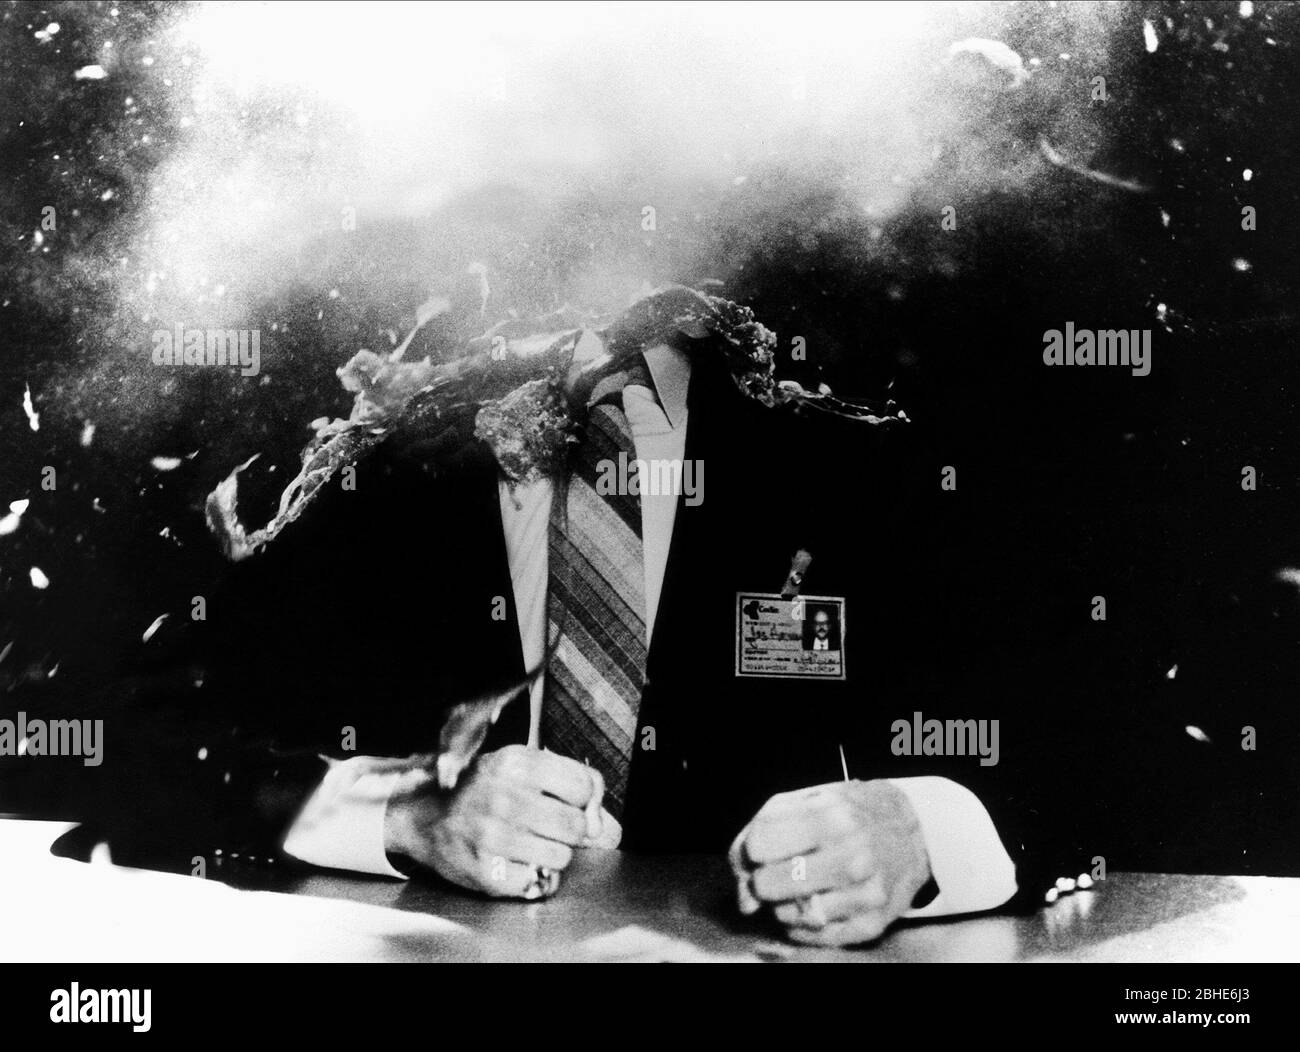 EXPLODING HEAD SCENE, SCANNERS, 1981 Stock Photo - Alamy